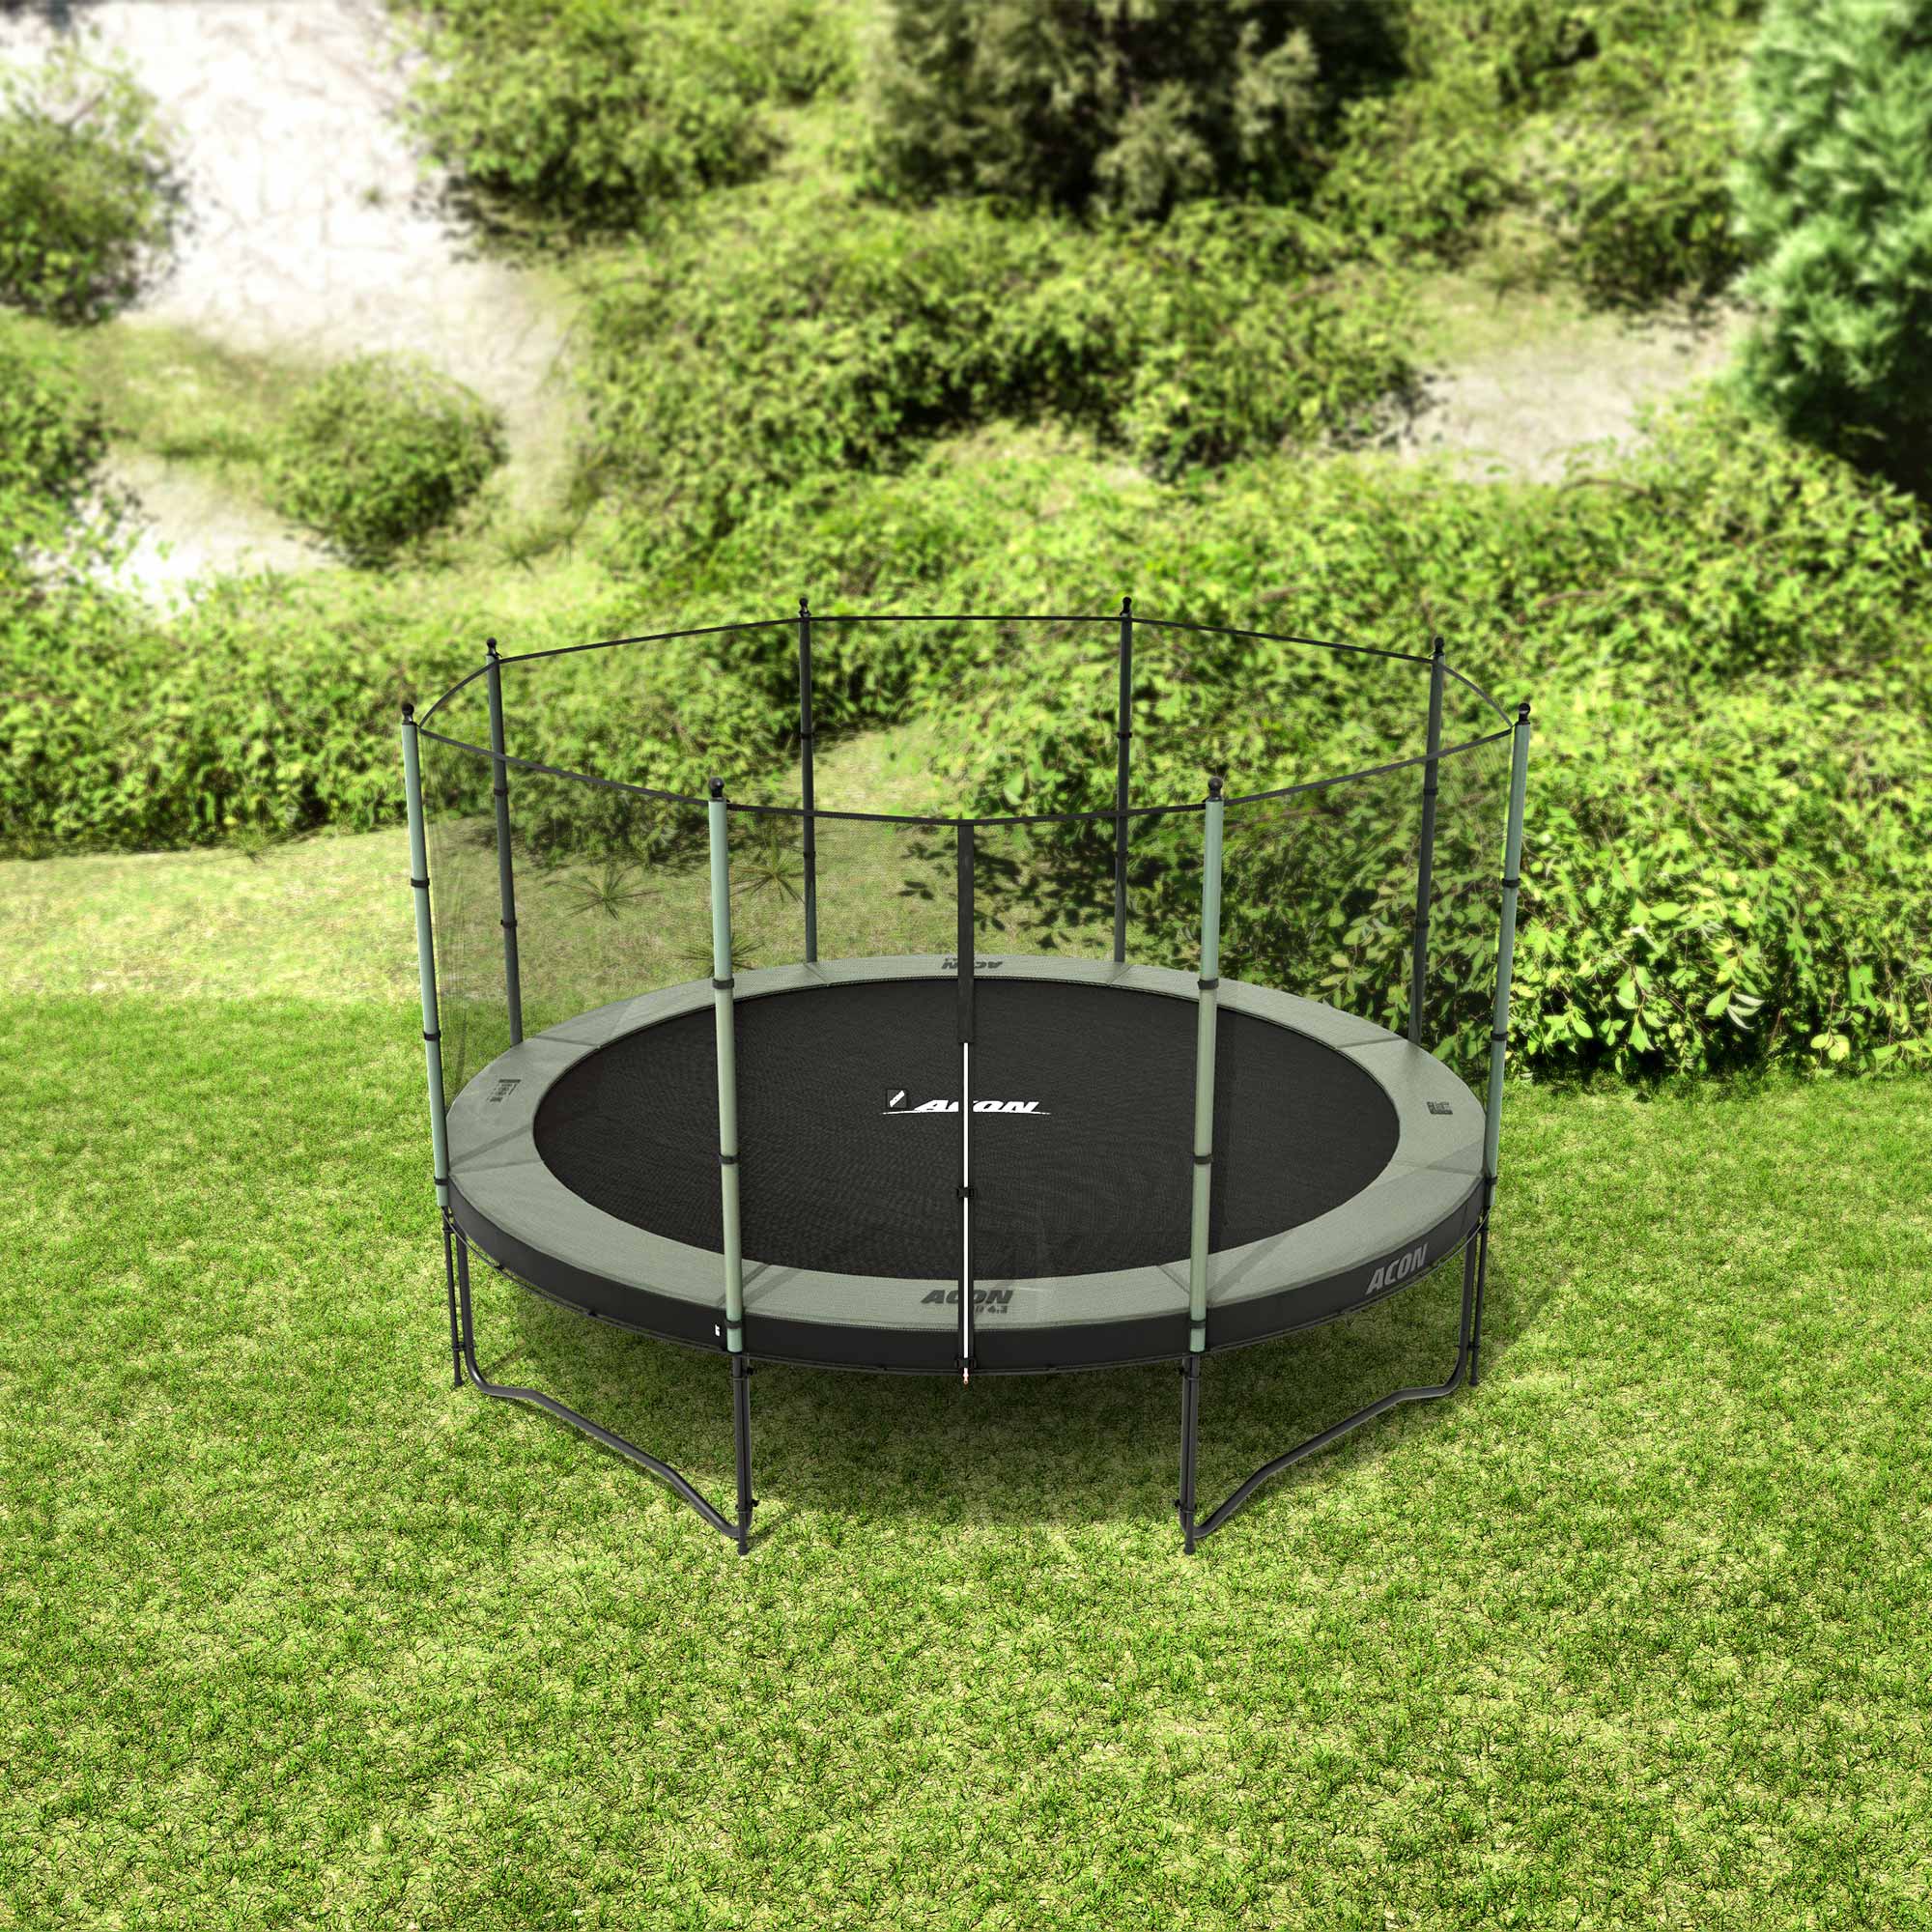 Round Acon trampoline with Standard Enclosure.